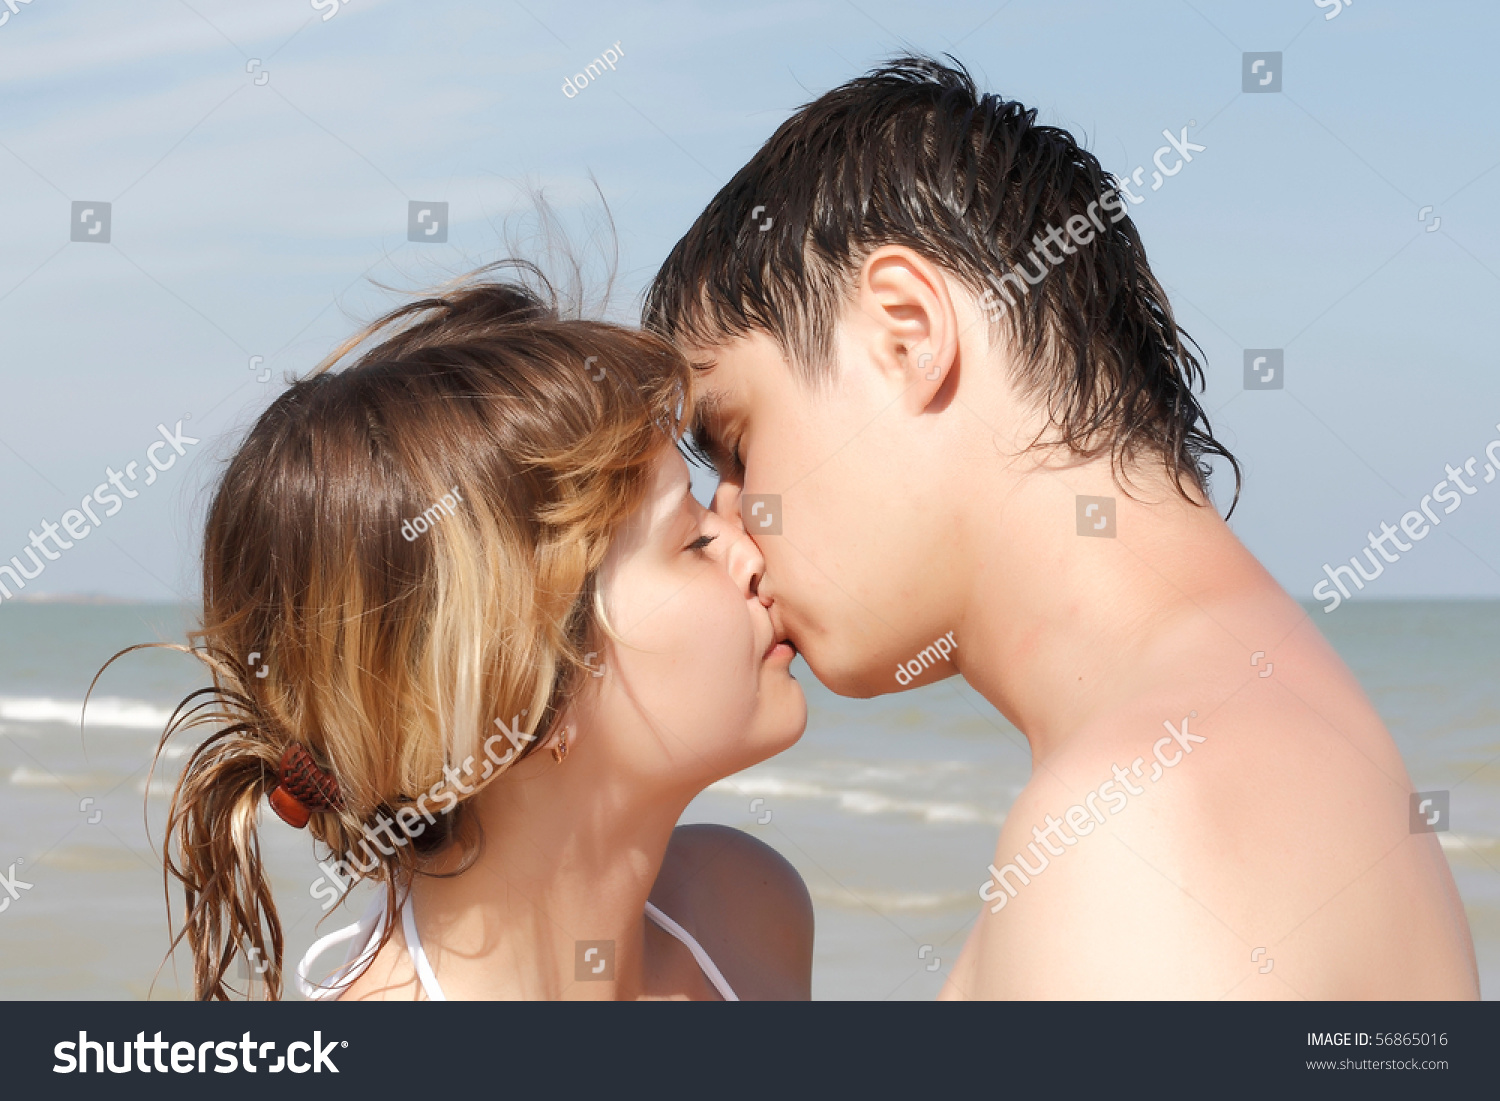 Girl And Boy Kissing Images near ne